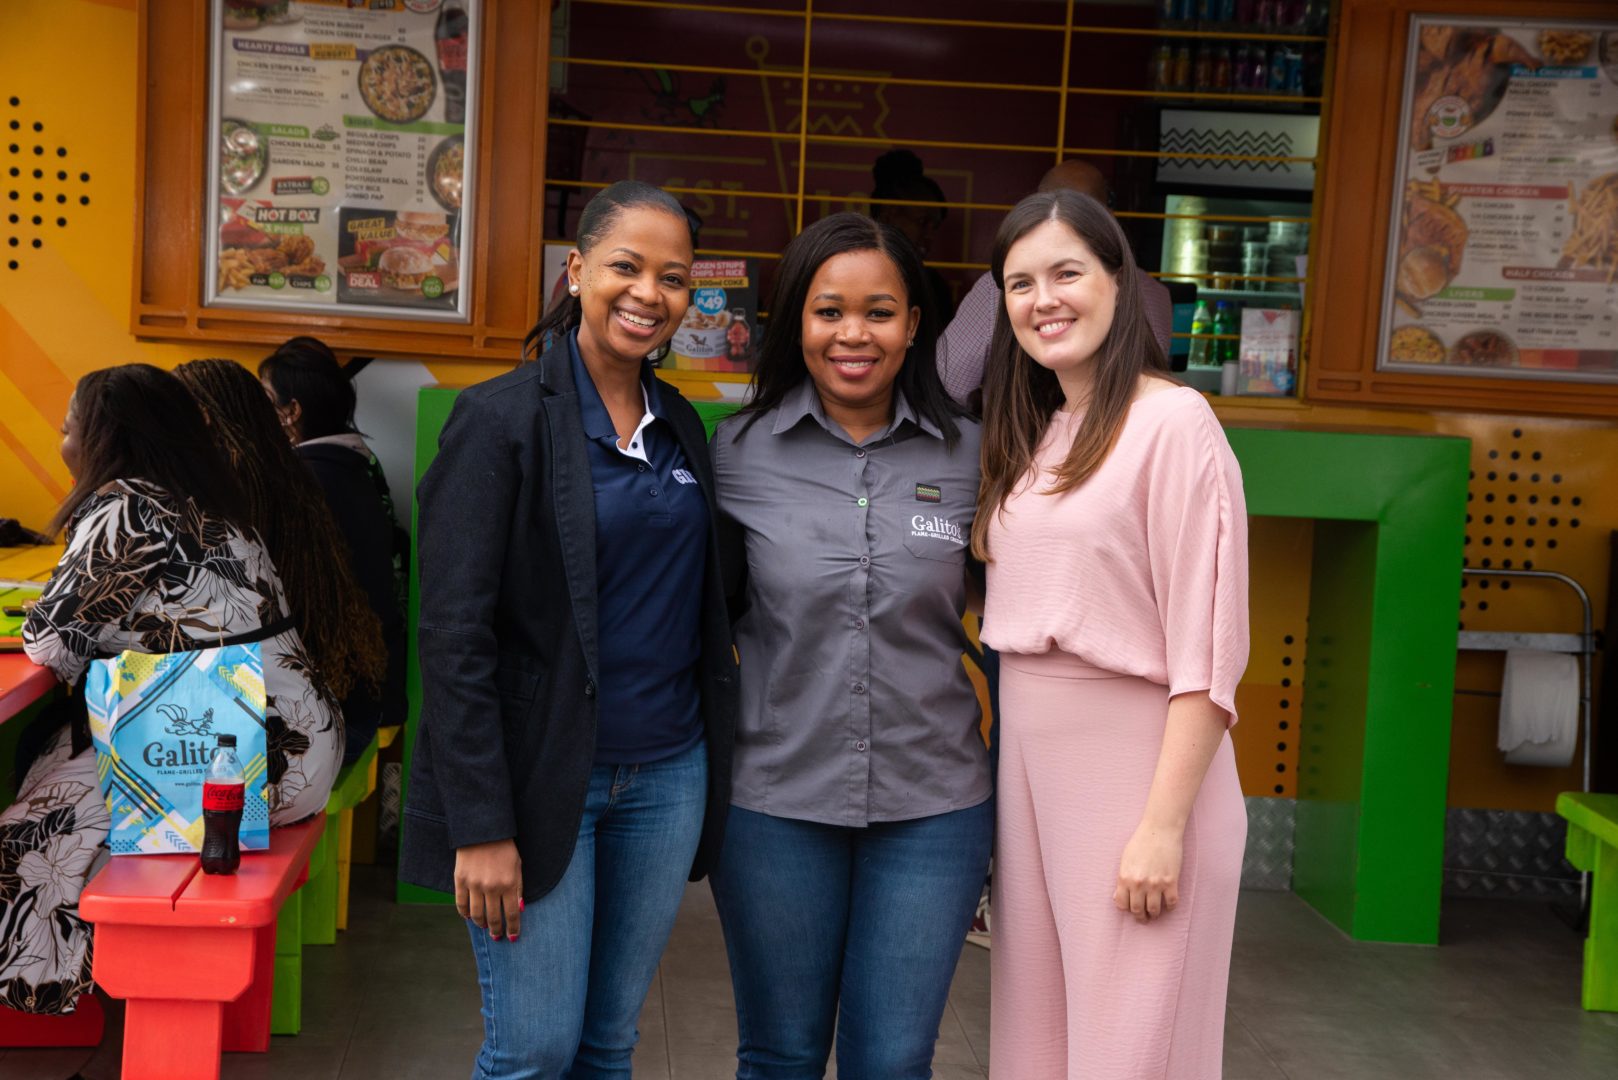 Foundation staff visits a woman entrepreneur's restaurant